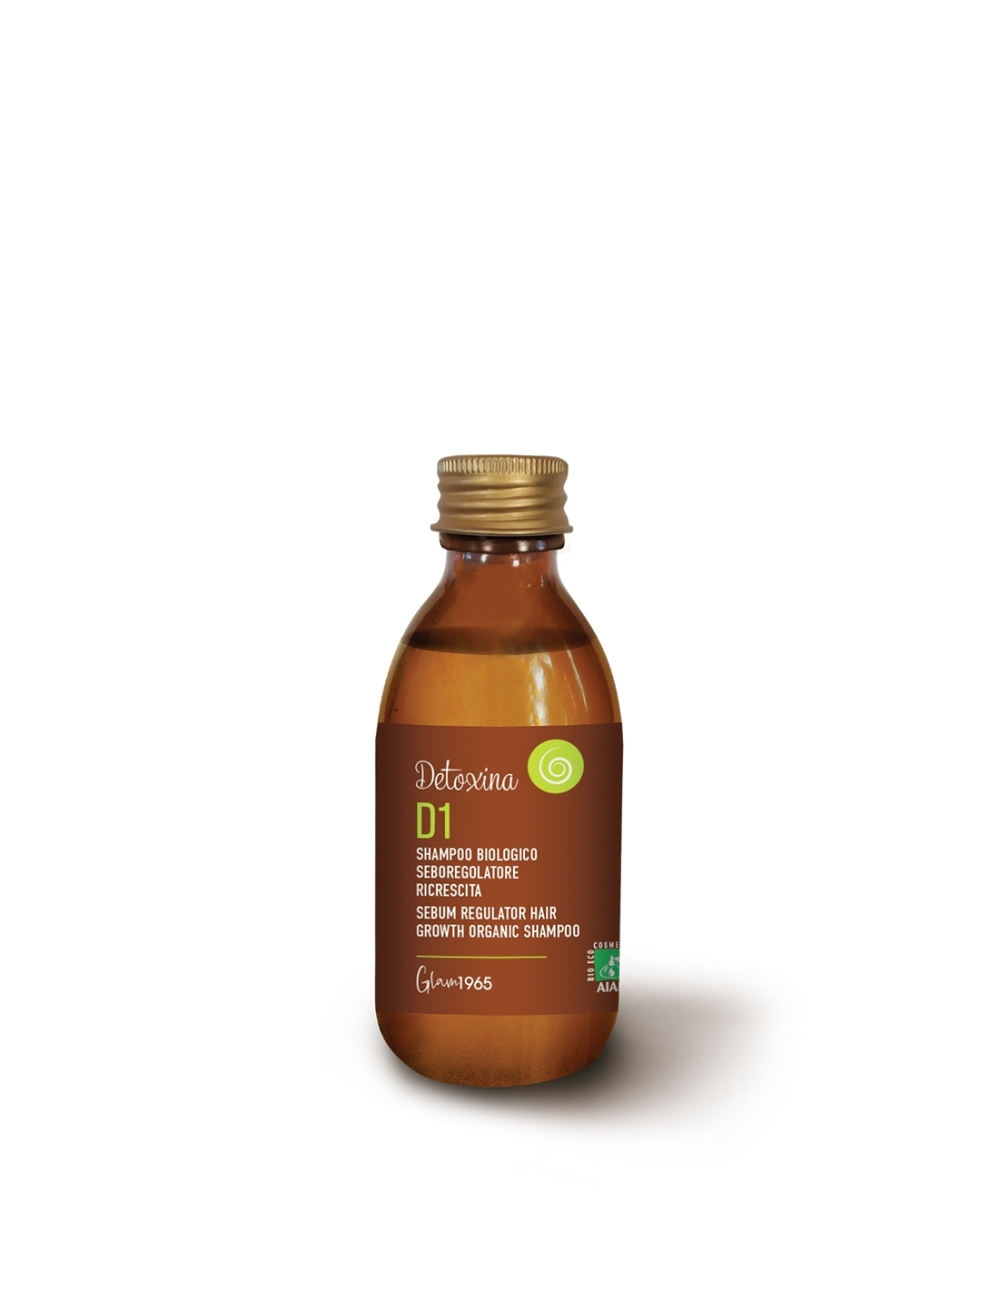 D1 | Sebum regulator hair growth organic shampoo